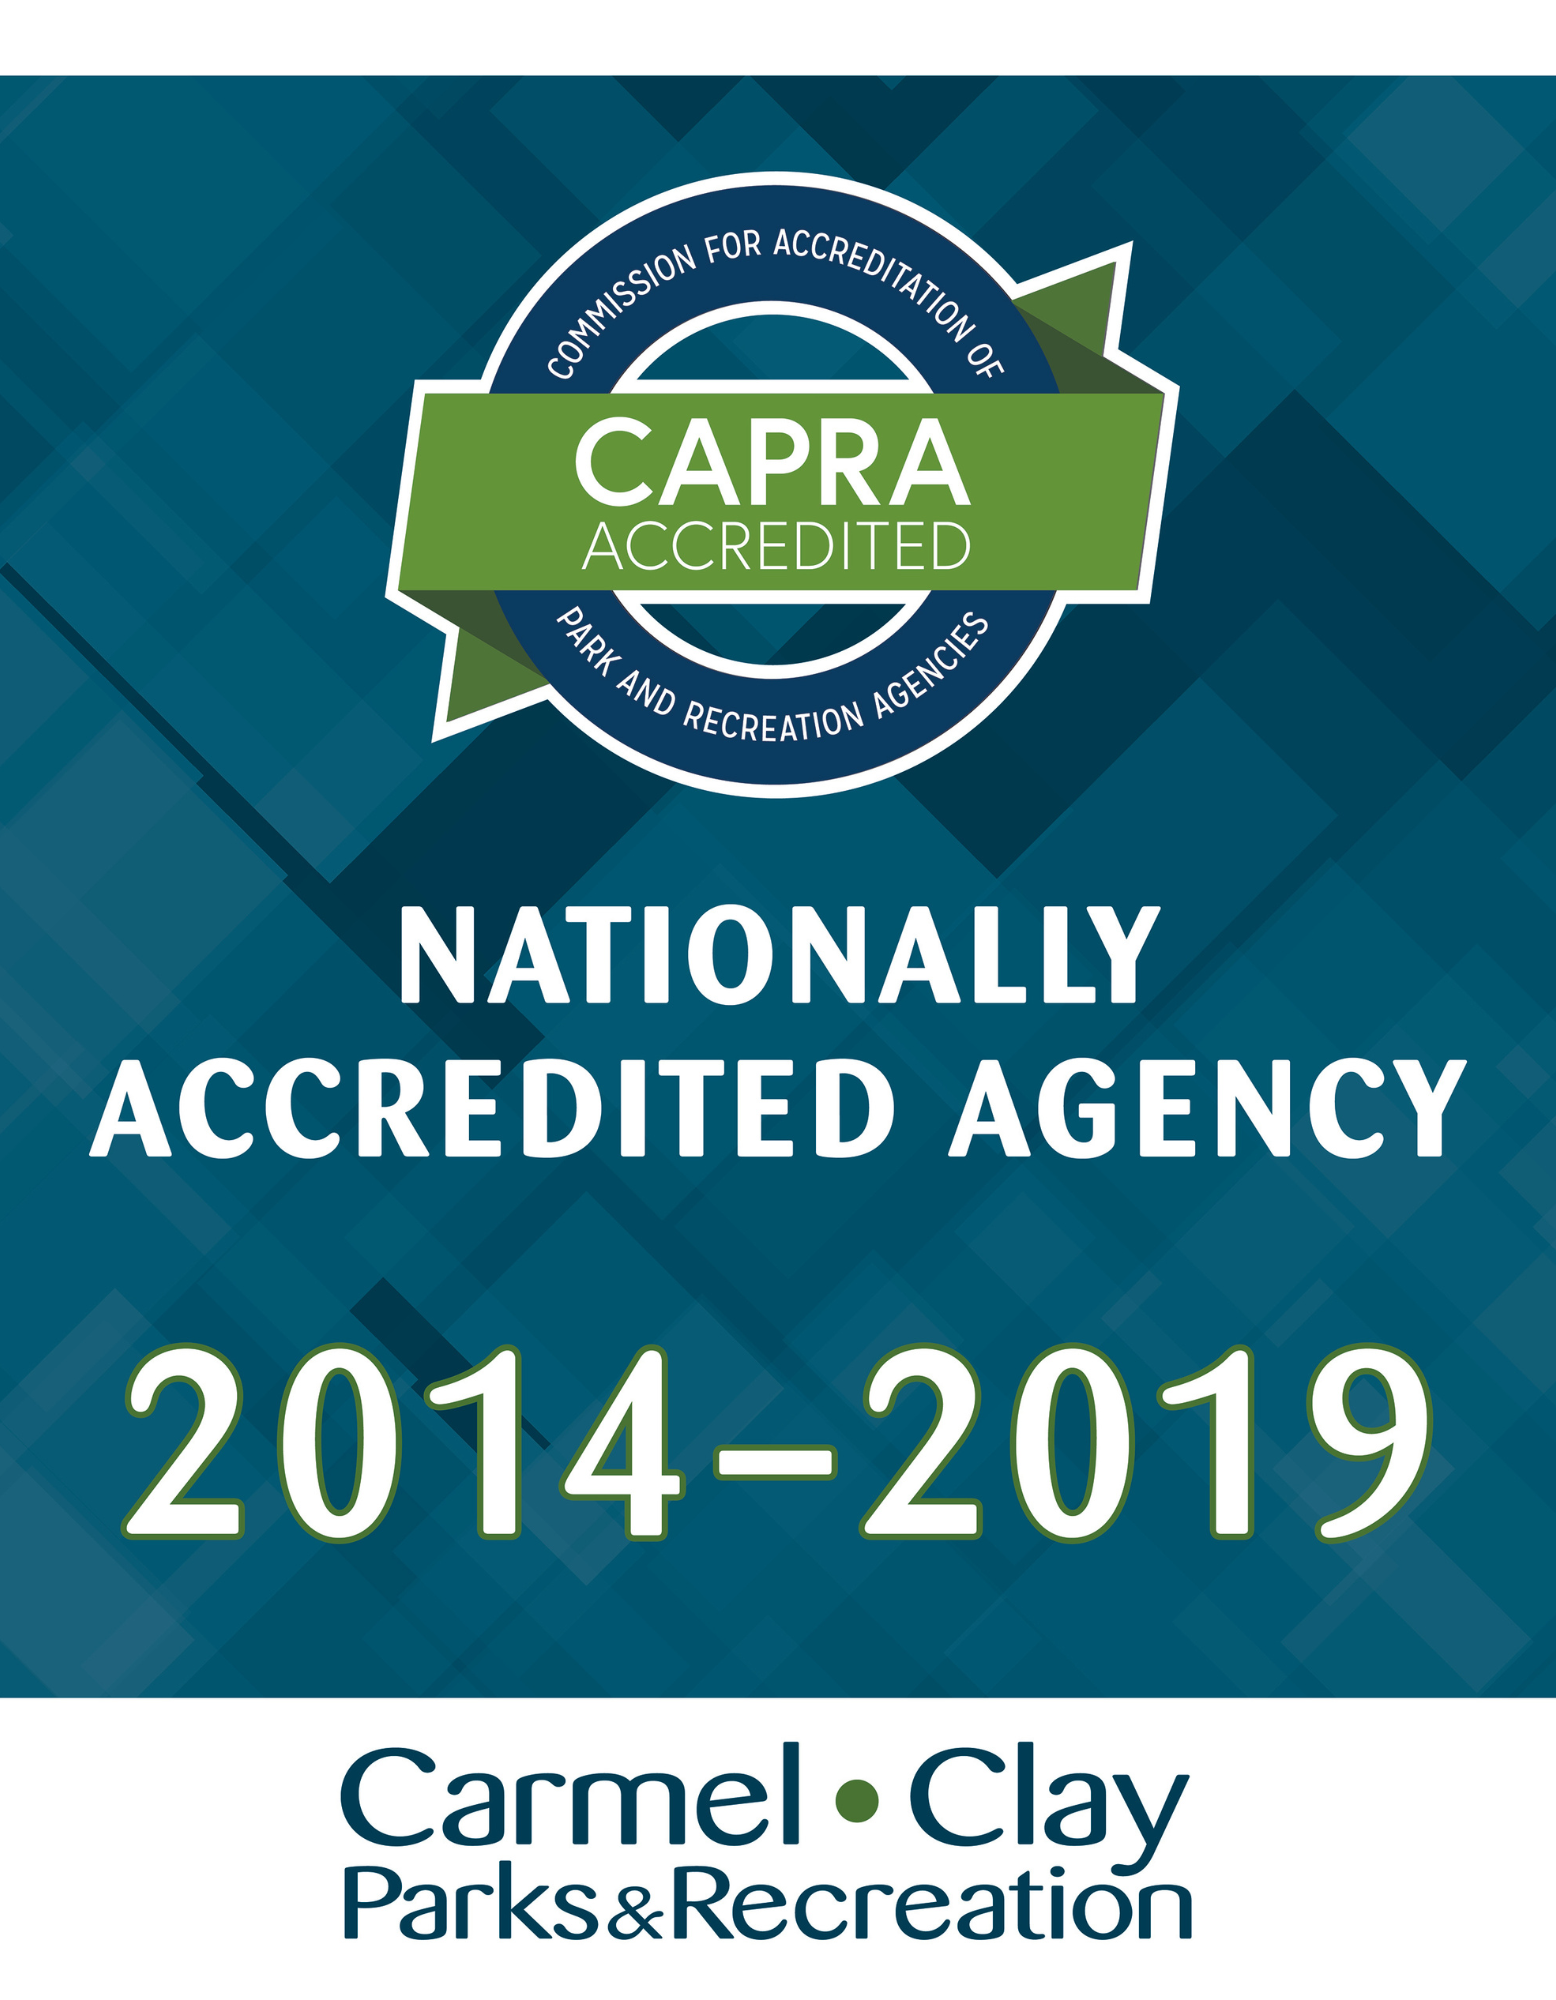 Capra accredited 2014-2019 banner